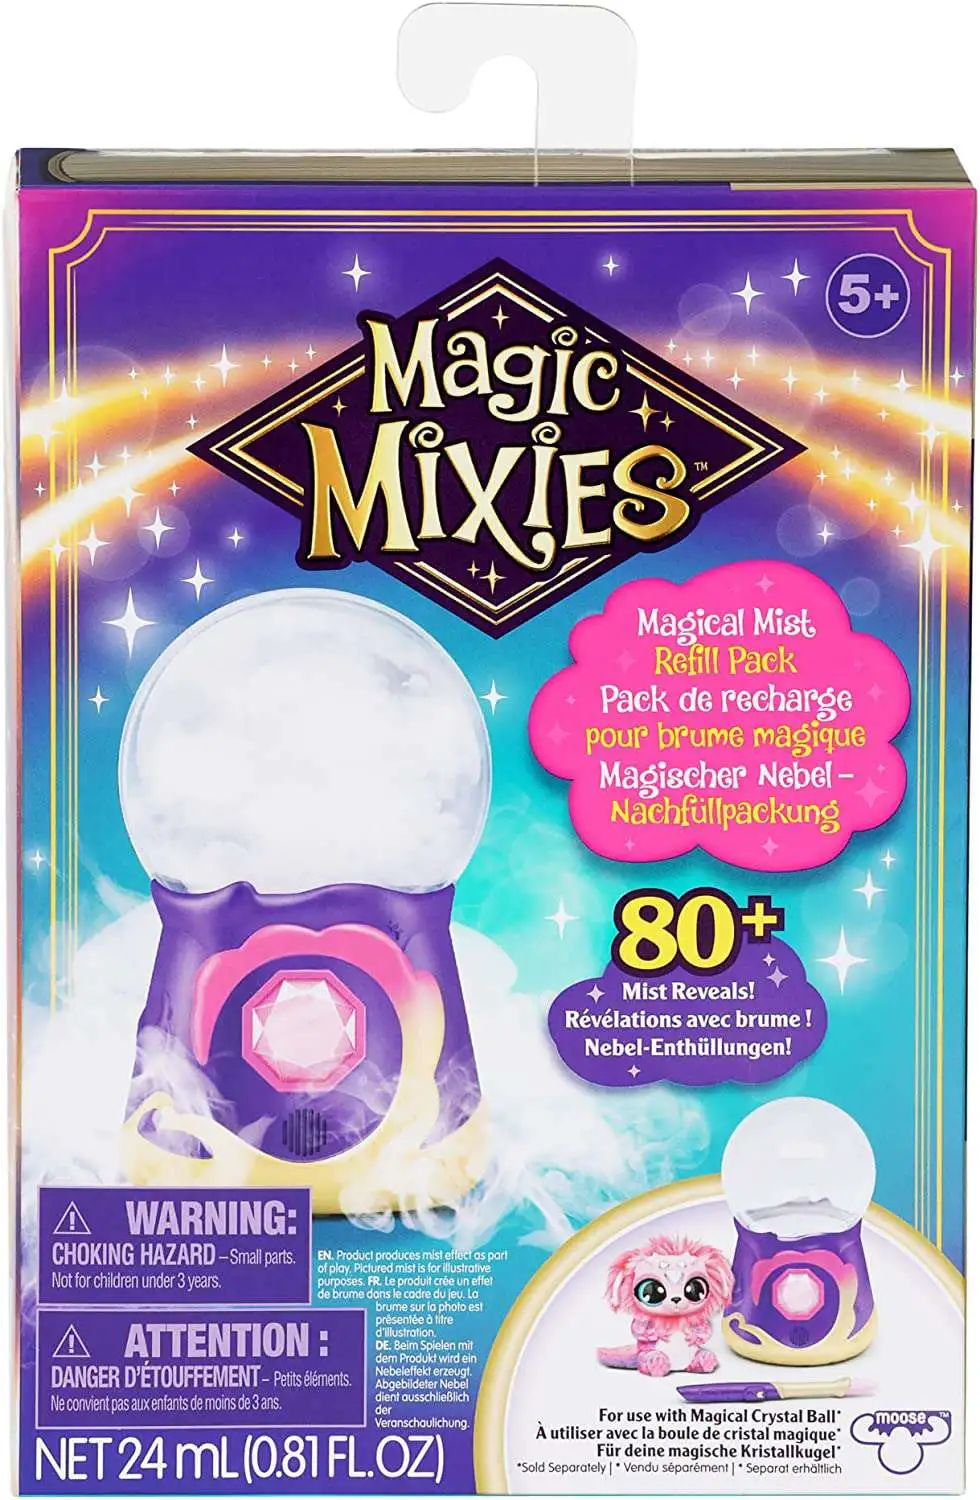 Magic Mixies - Magic Cauldron Refill Pack